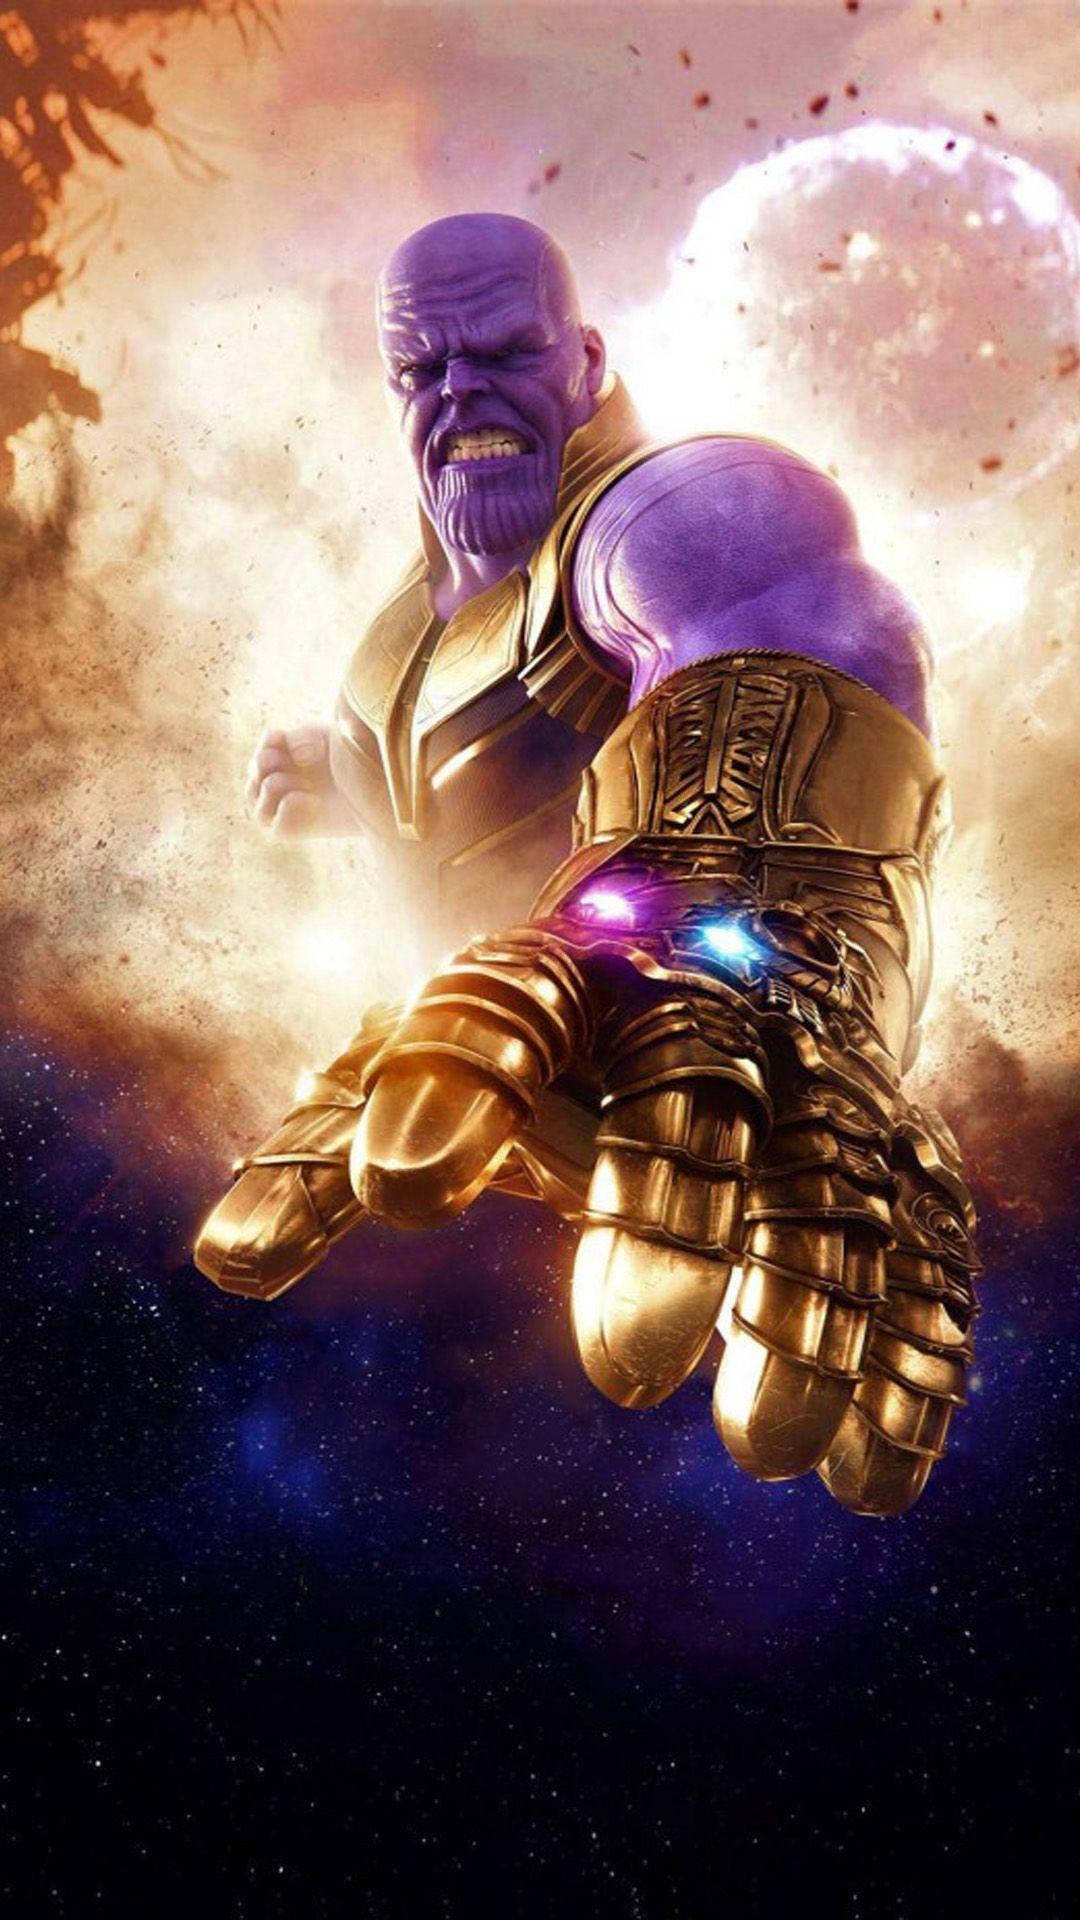 Thanos Avengers Infinity War 2018. Marvel. Thanos marvel, Marvel